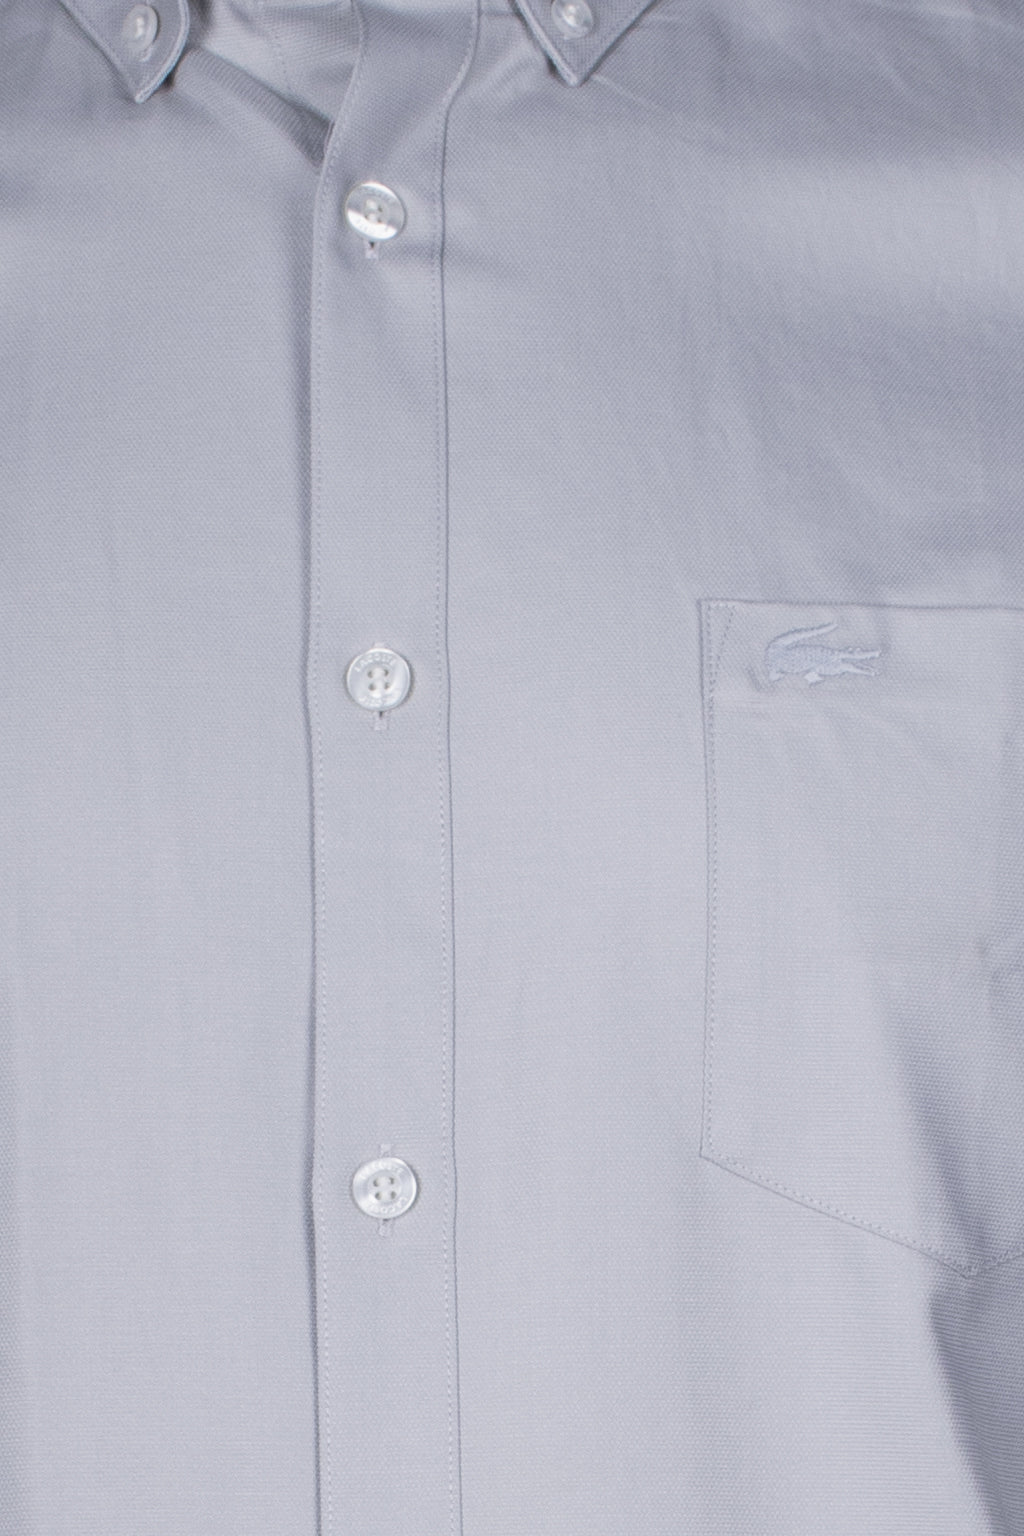 Lacoste - Men's Regular Fit Cotton Poplin Shirt